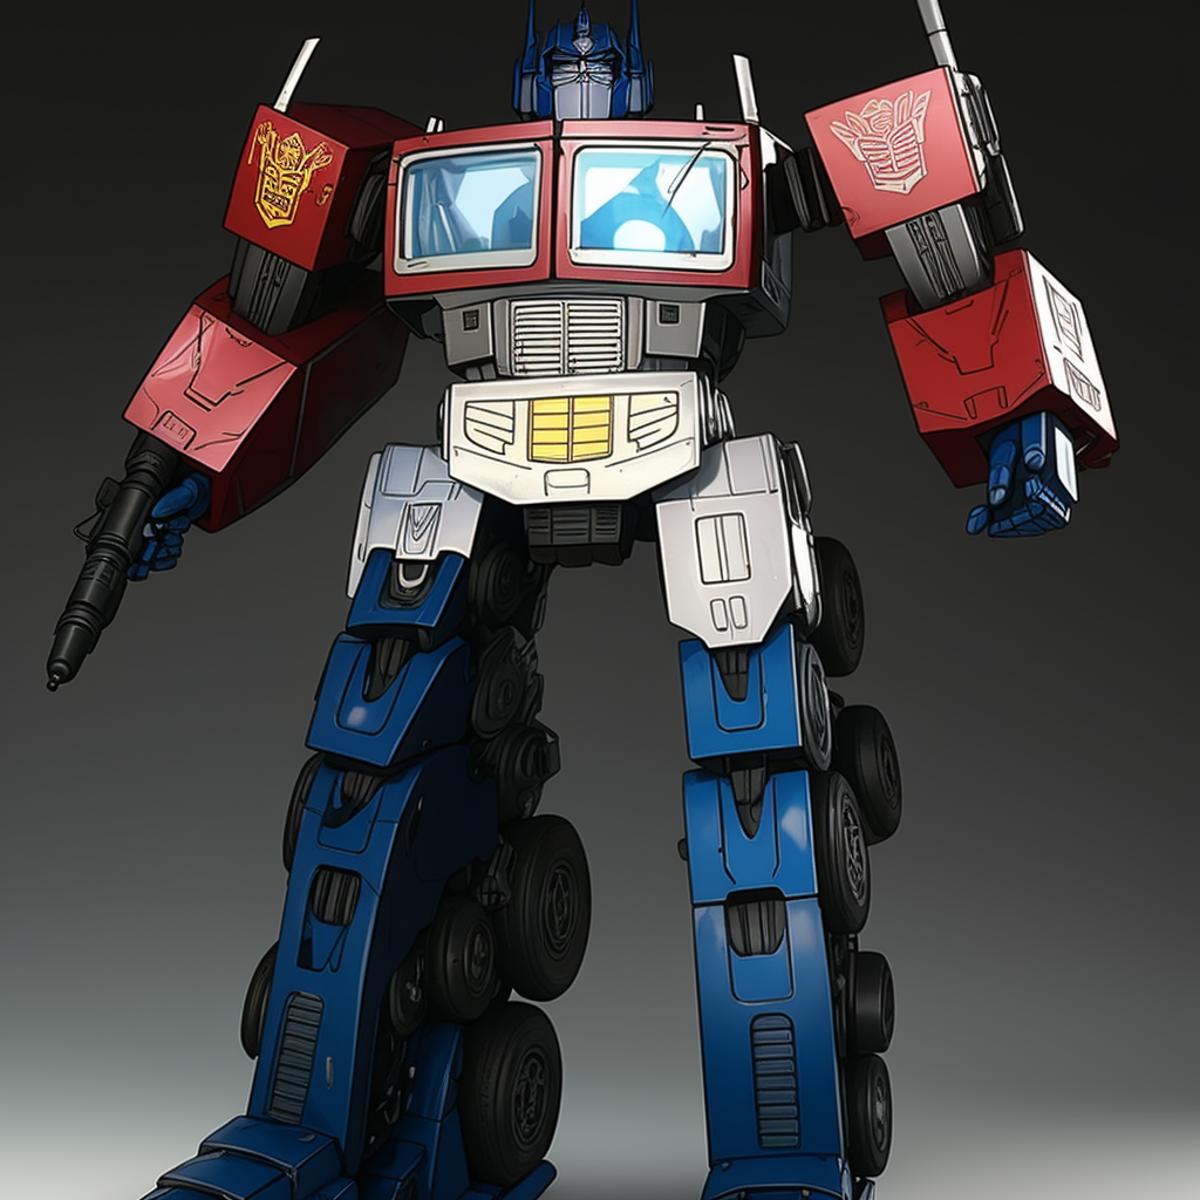 Optimus Prime image by possom2009